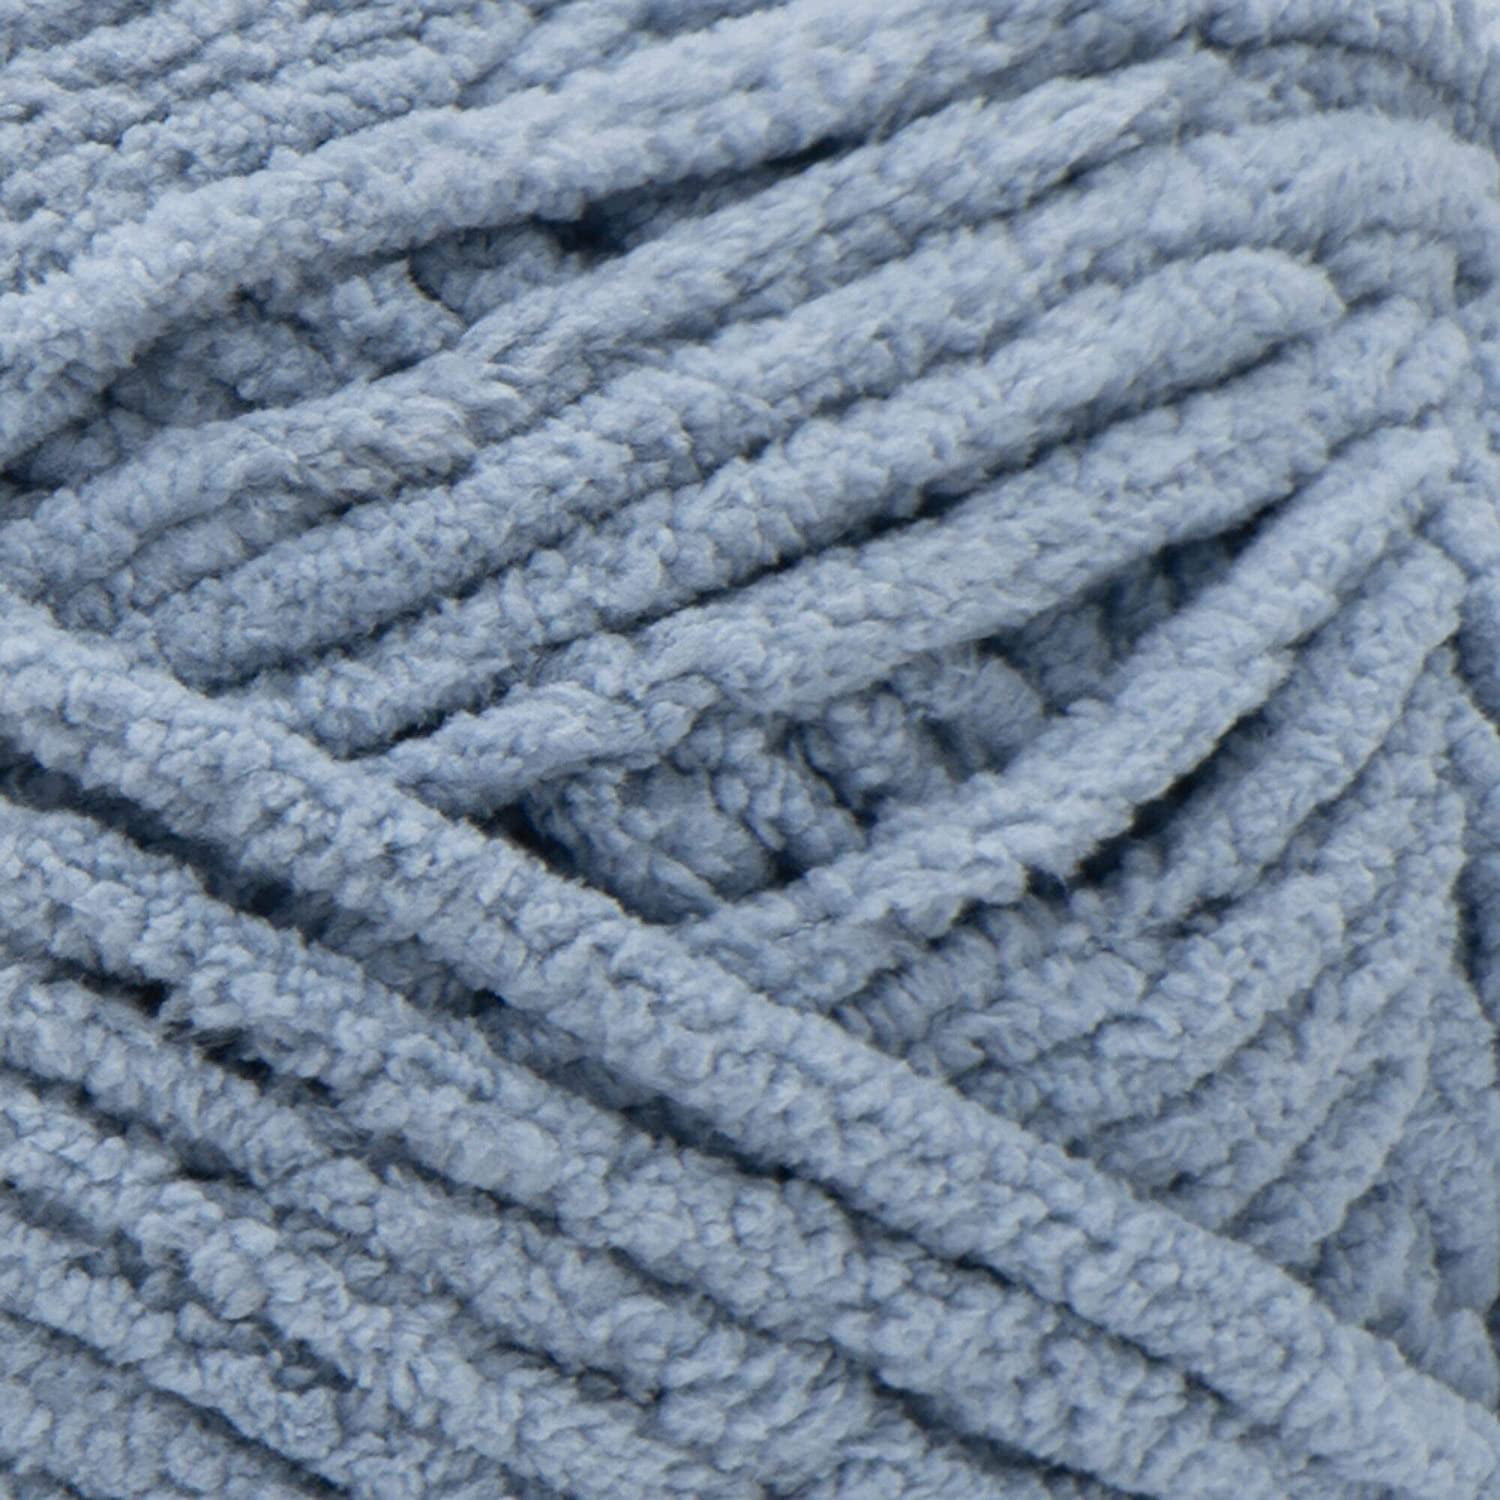 Bernat Blanket Ombre Yarn-Shade Blue Ombre, 1 count - Harris Teeter